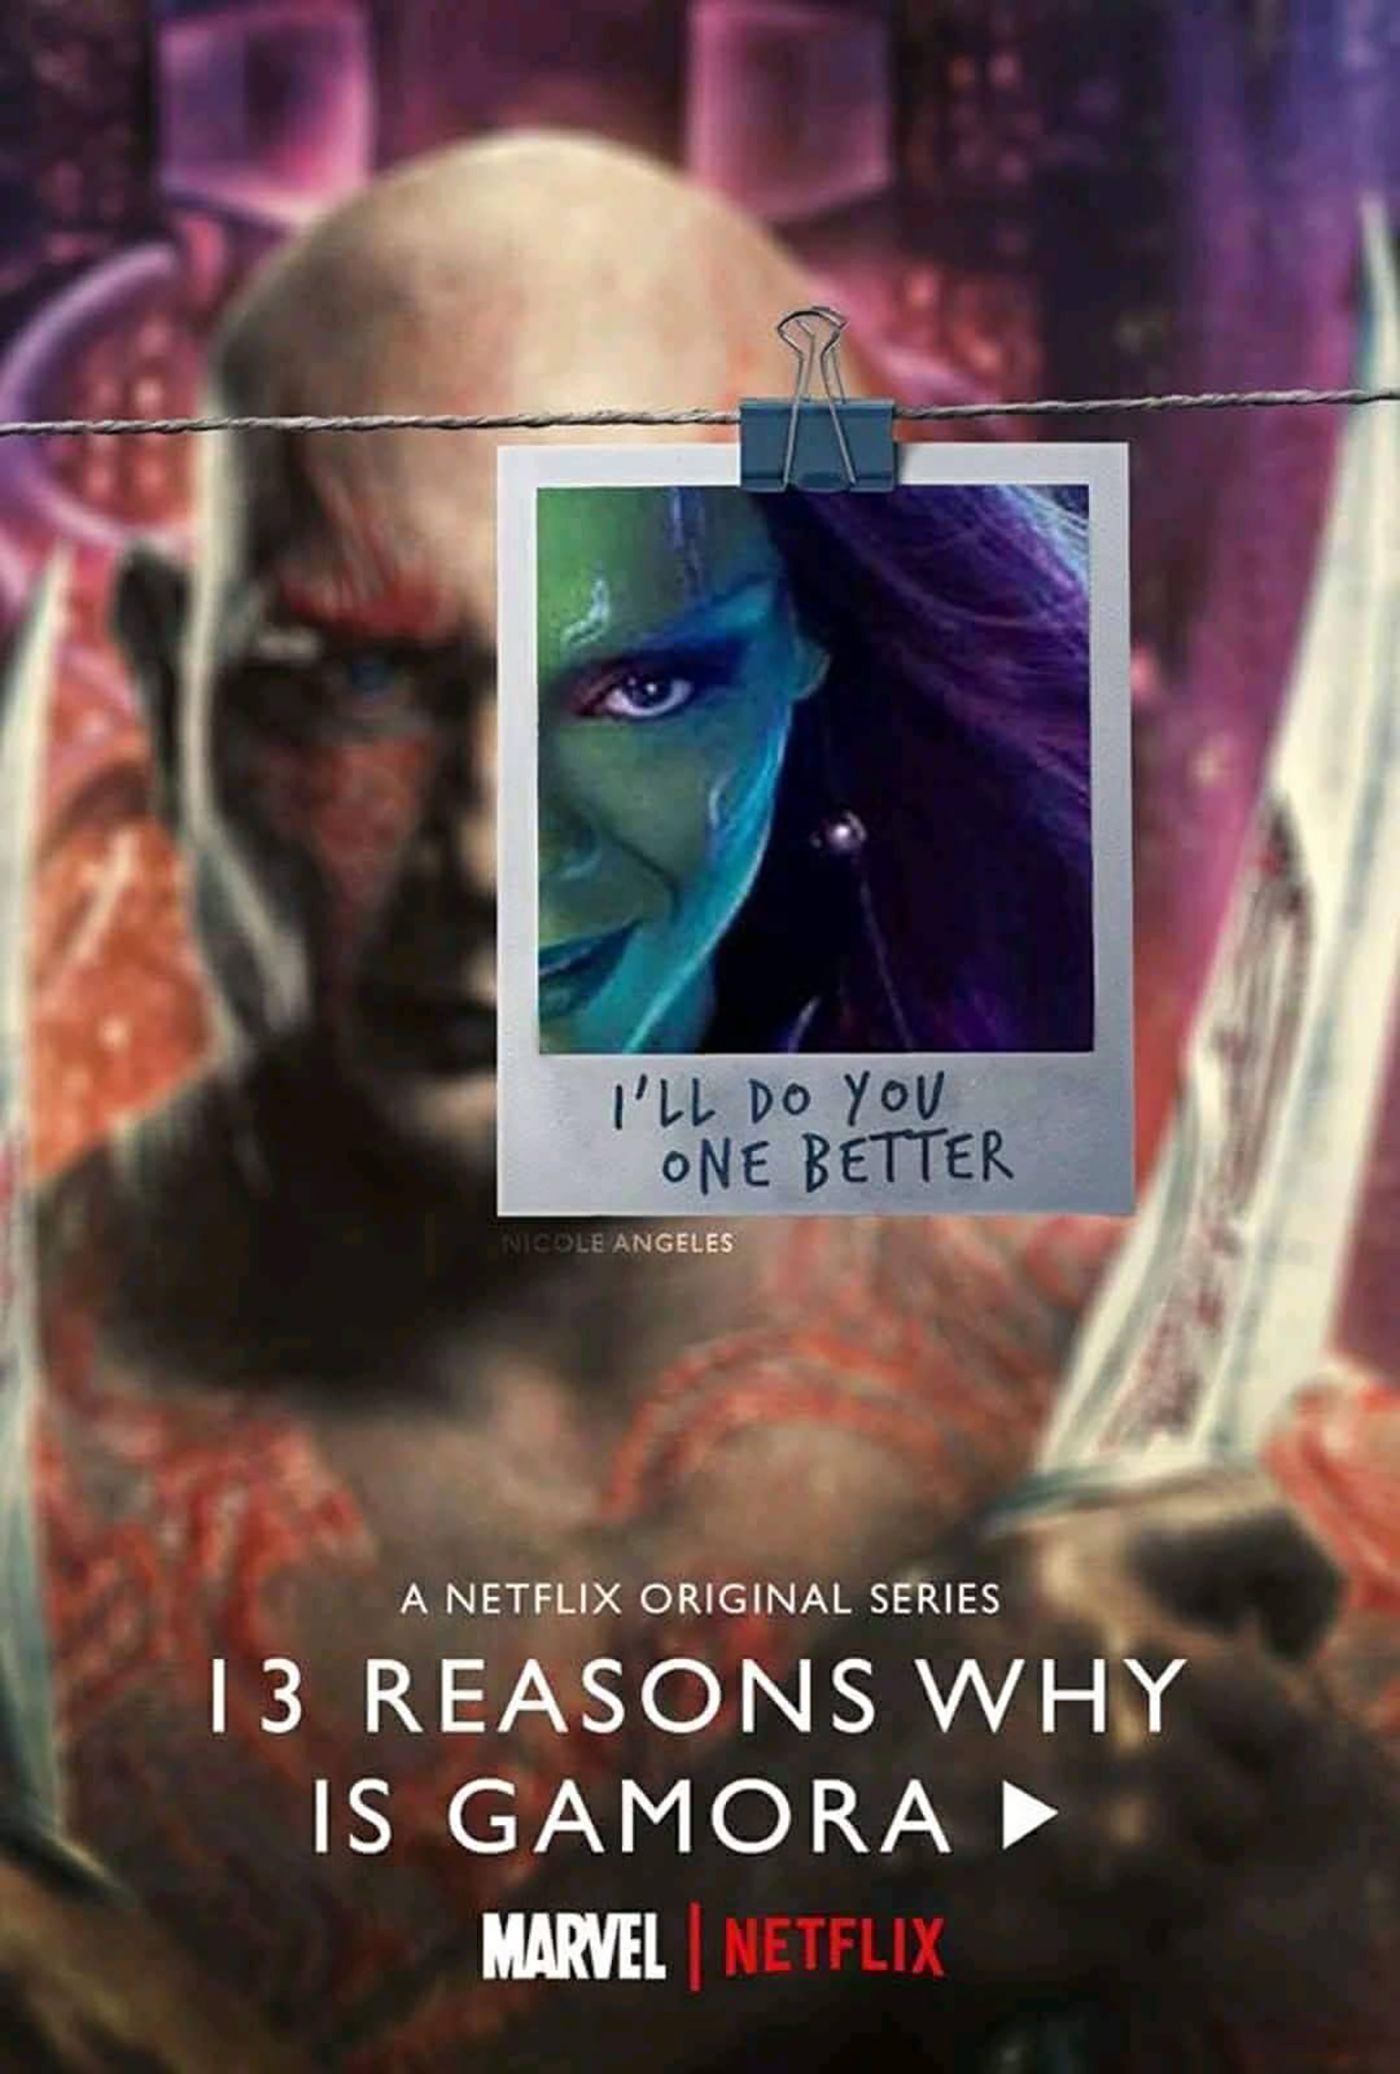 Drax 13 Reasons Why Is a Gamora